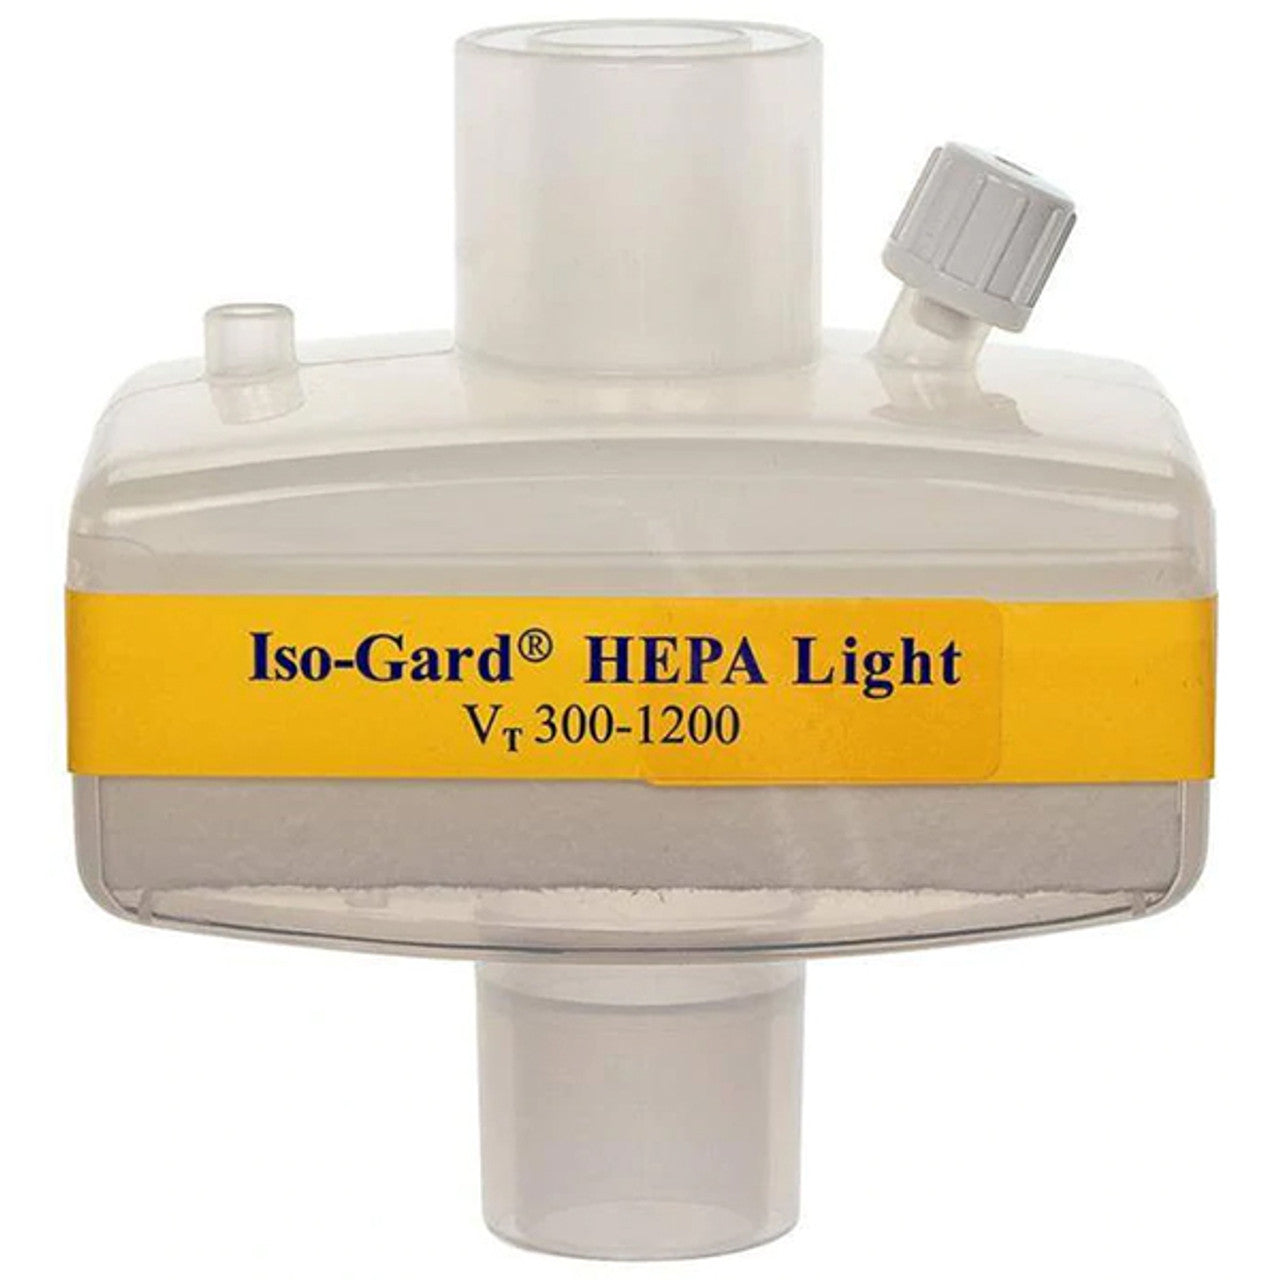 Iso-Gard Hepa Light